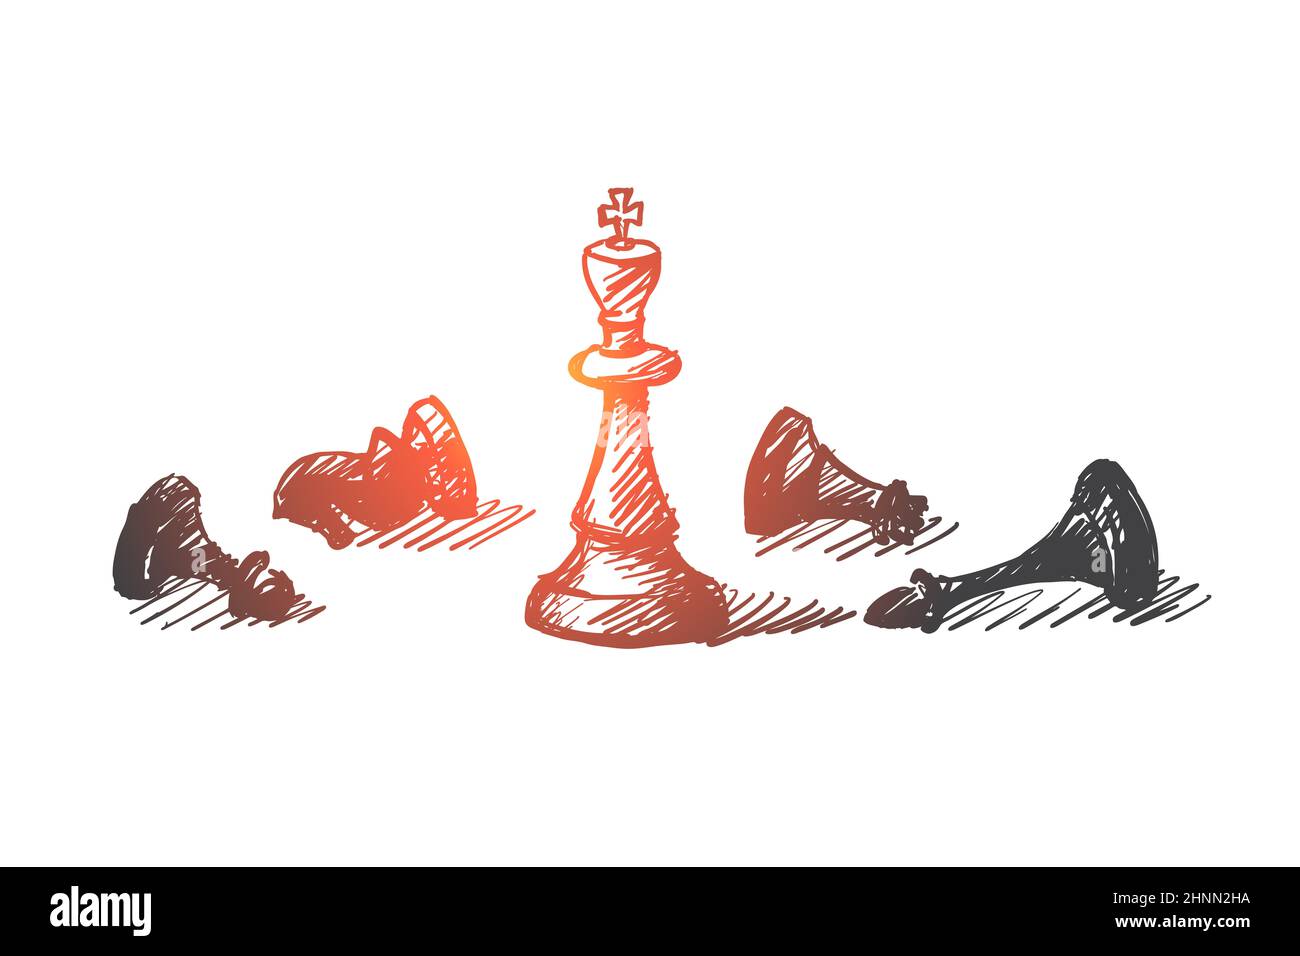 Chess King  Charcoal art, Cool art drawings, Chess piece tattoo